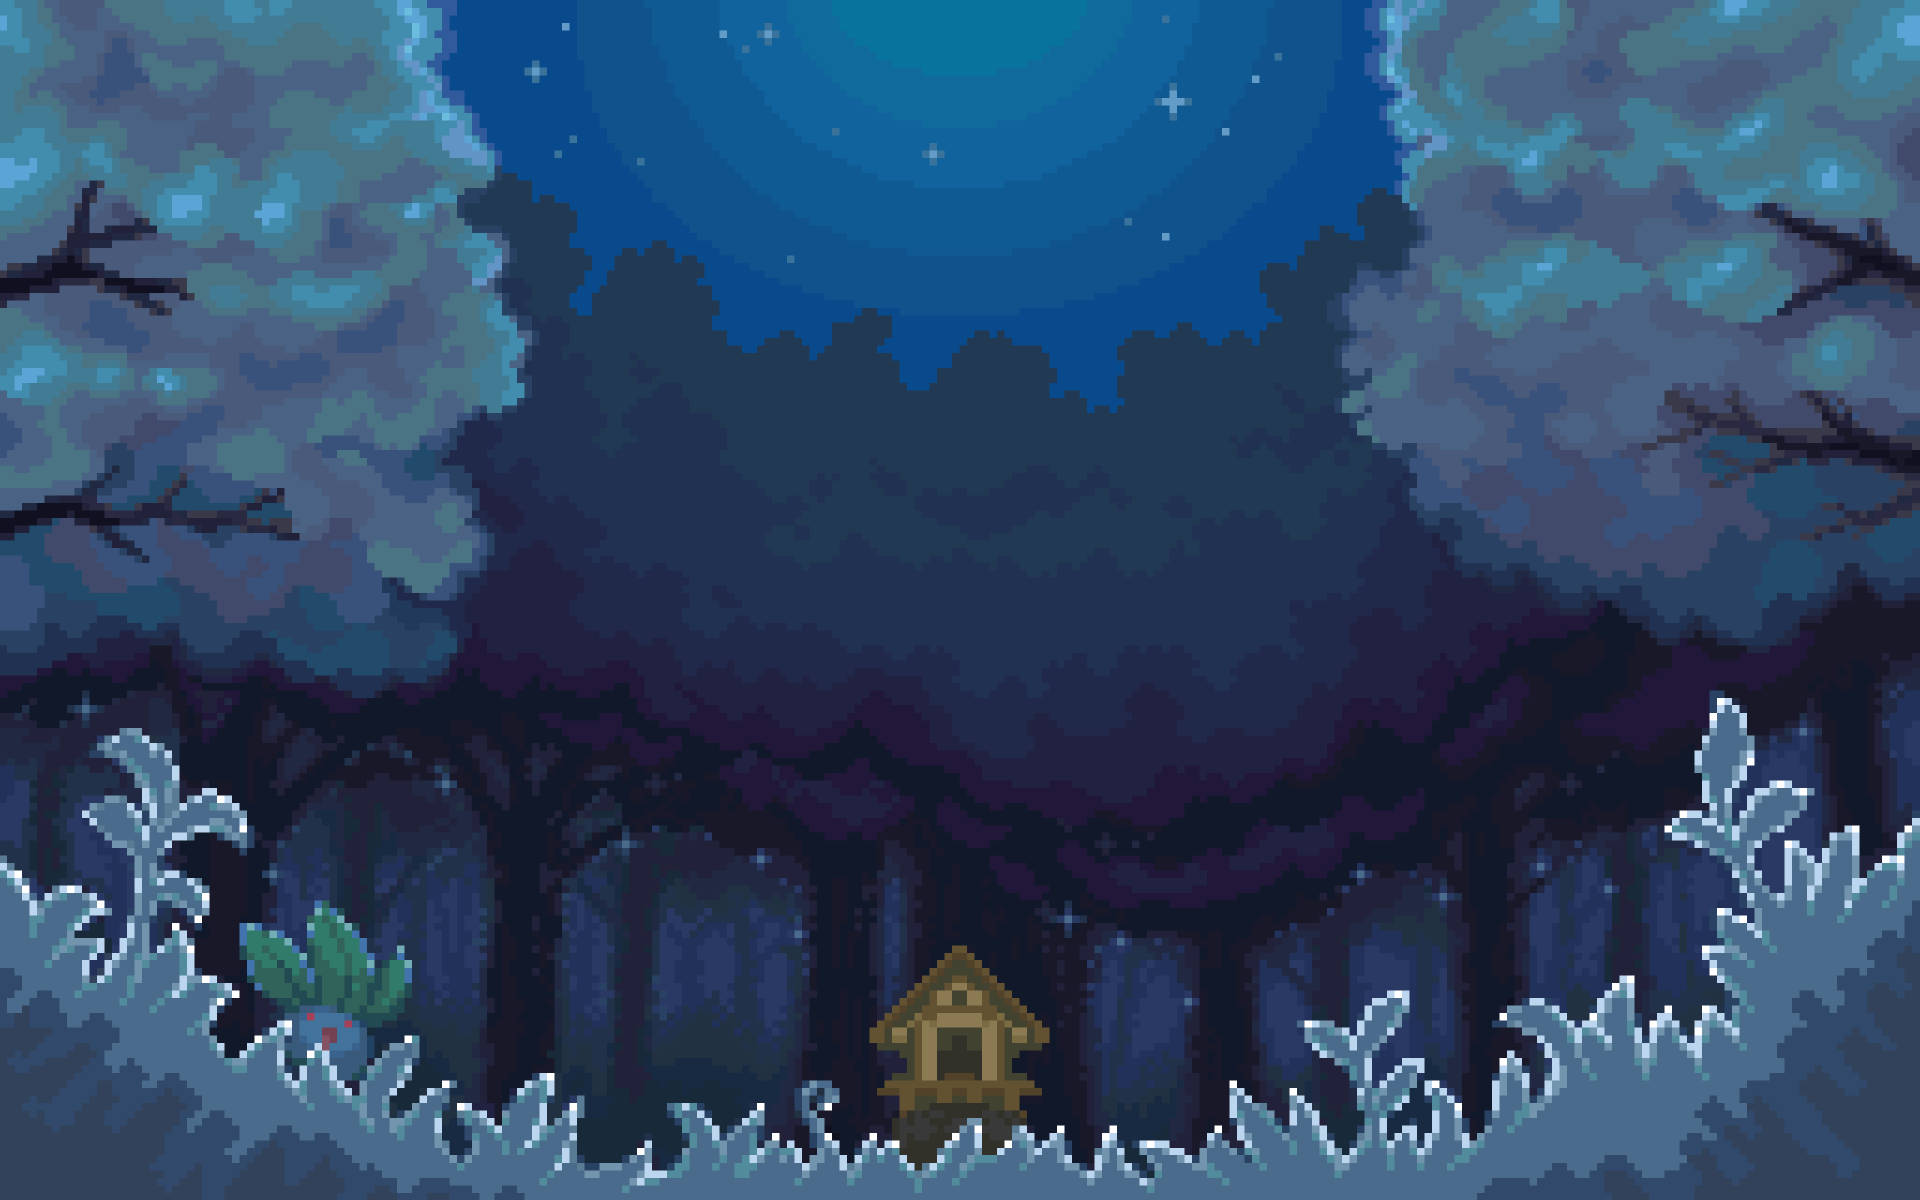 Pixel art image of a dark forest at night - Pixel art